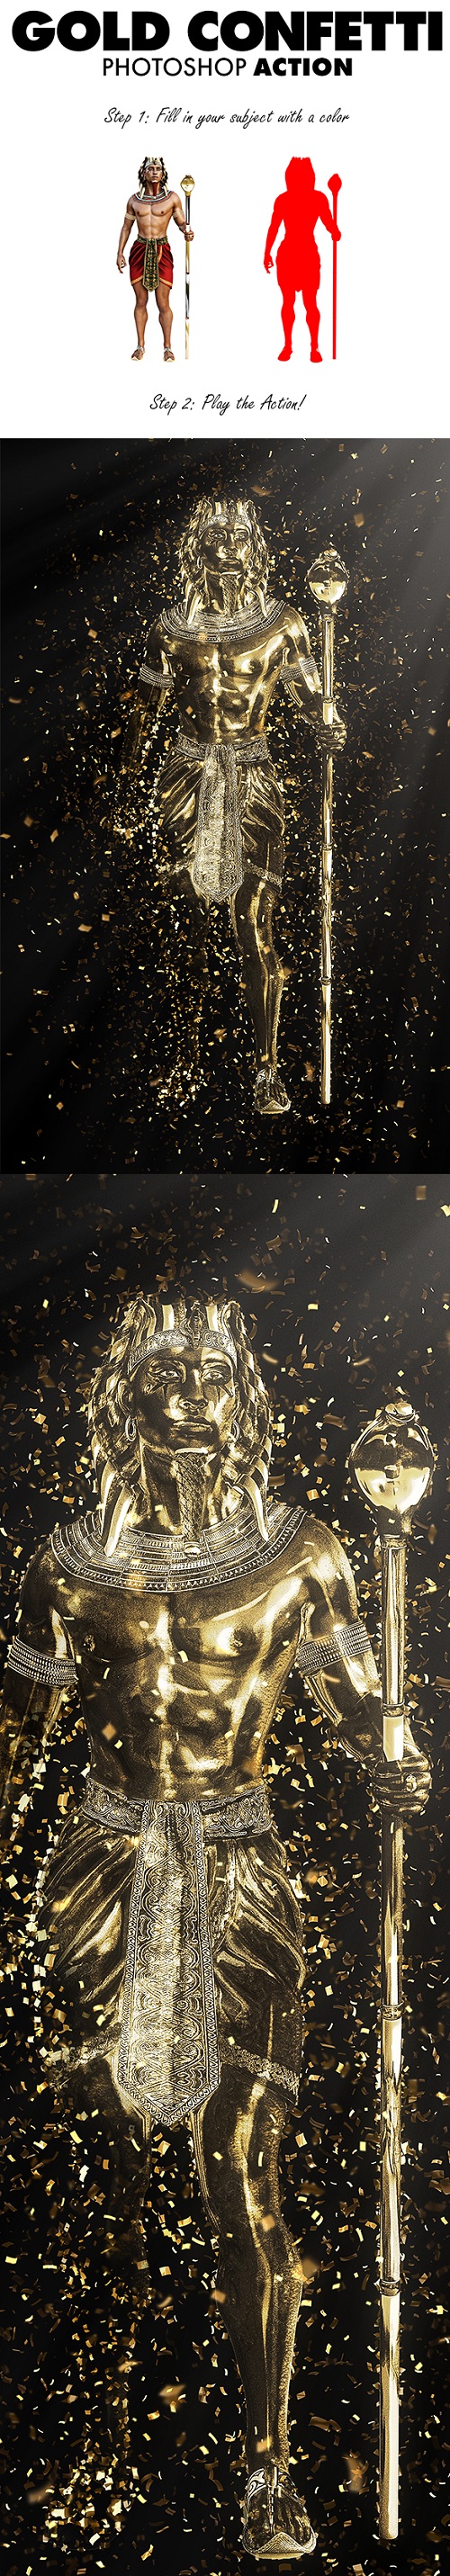 Gold Confetti Photoshop Action 20237930